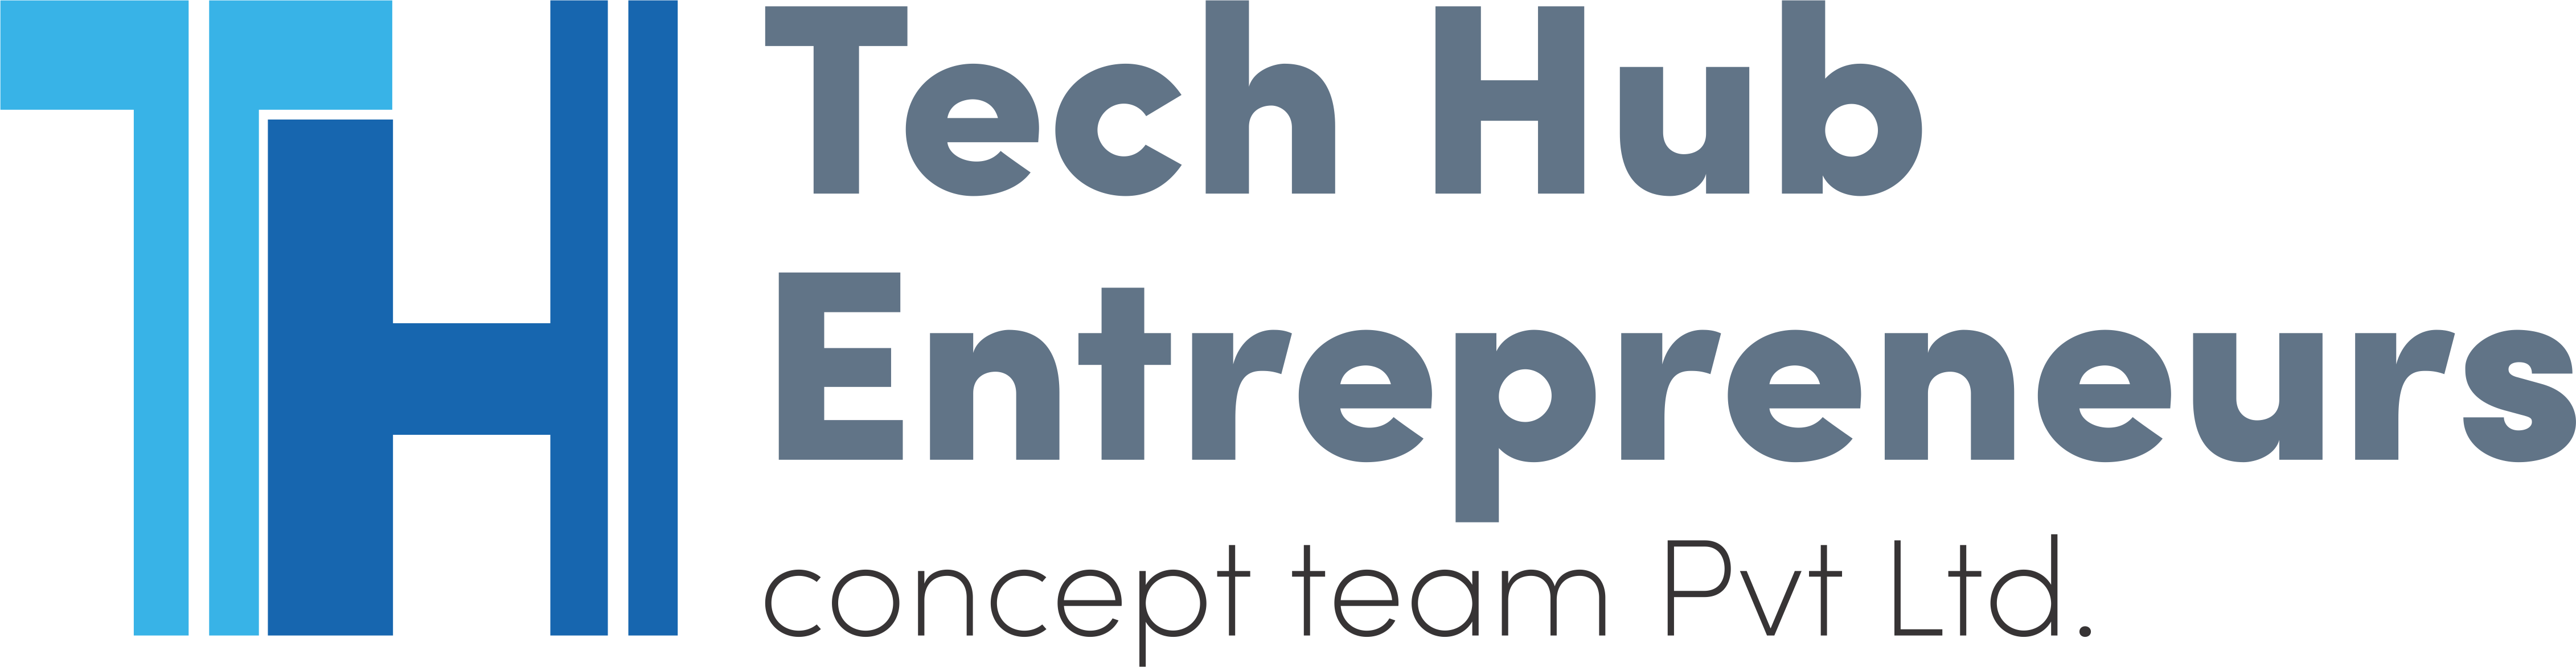 Tech Hub Entrepreneurs Concept Team Pvt Ltd